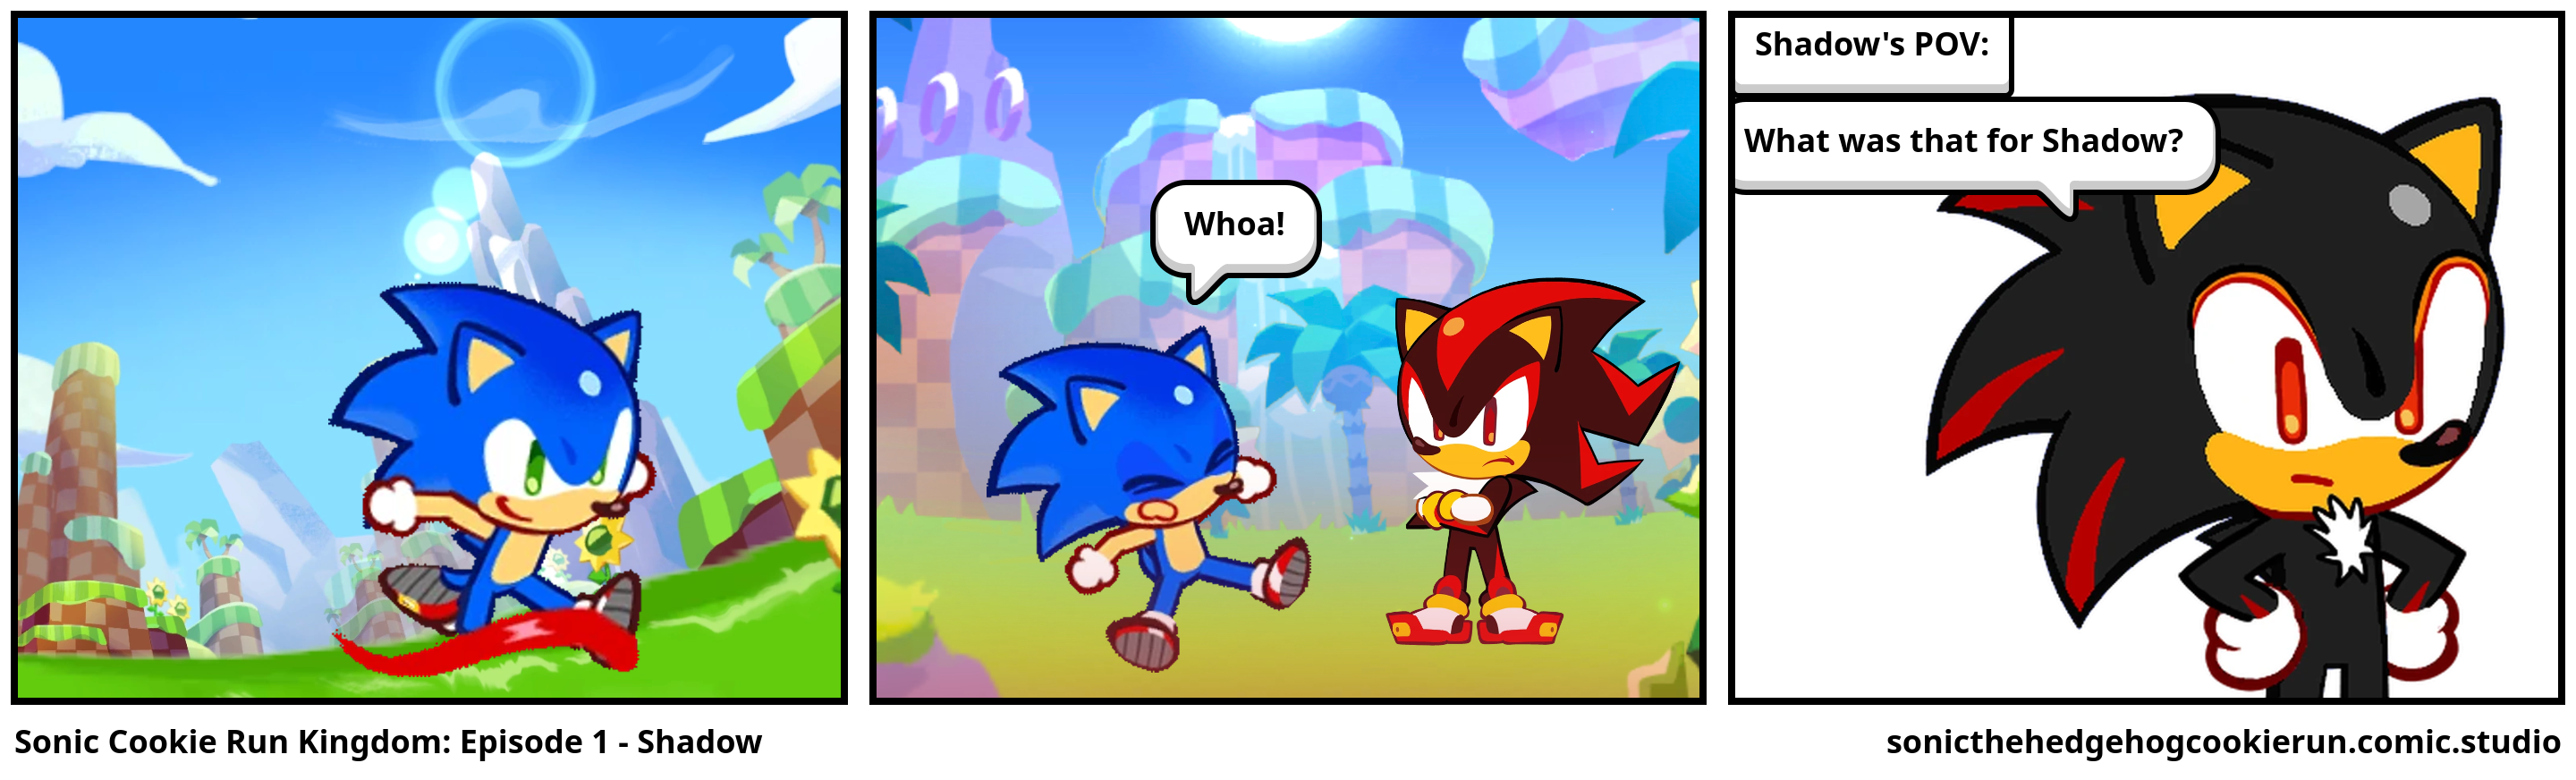 Sonic Cookie Run Kingdom: Episode 1 - Shadow